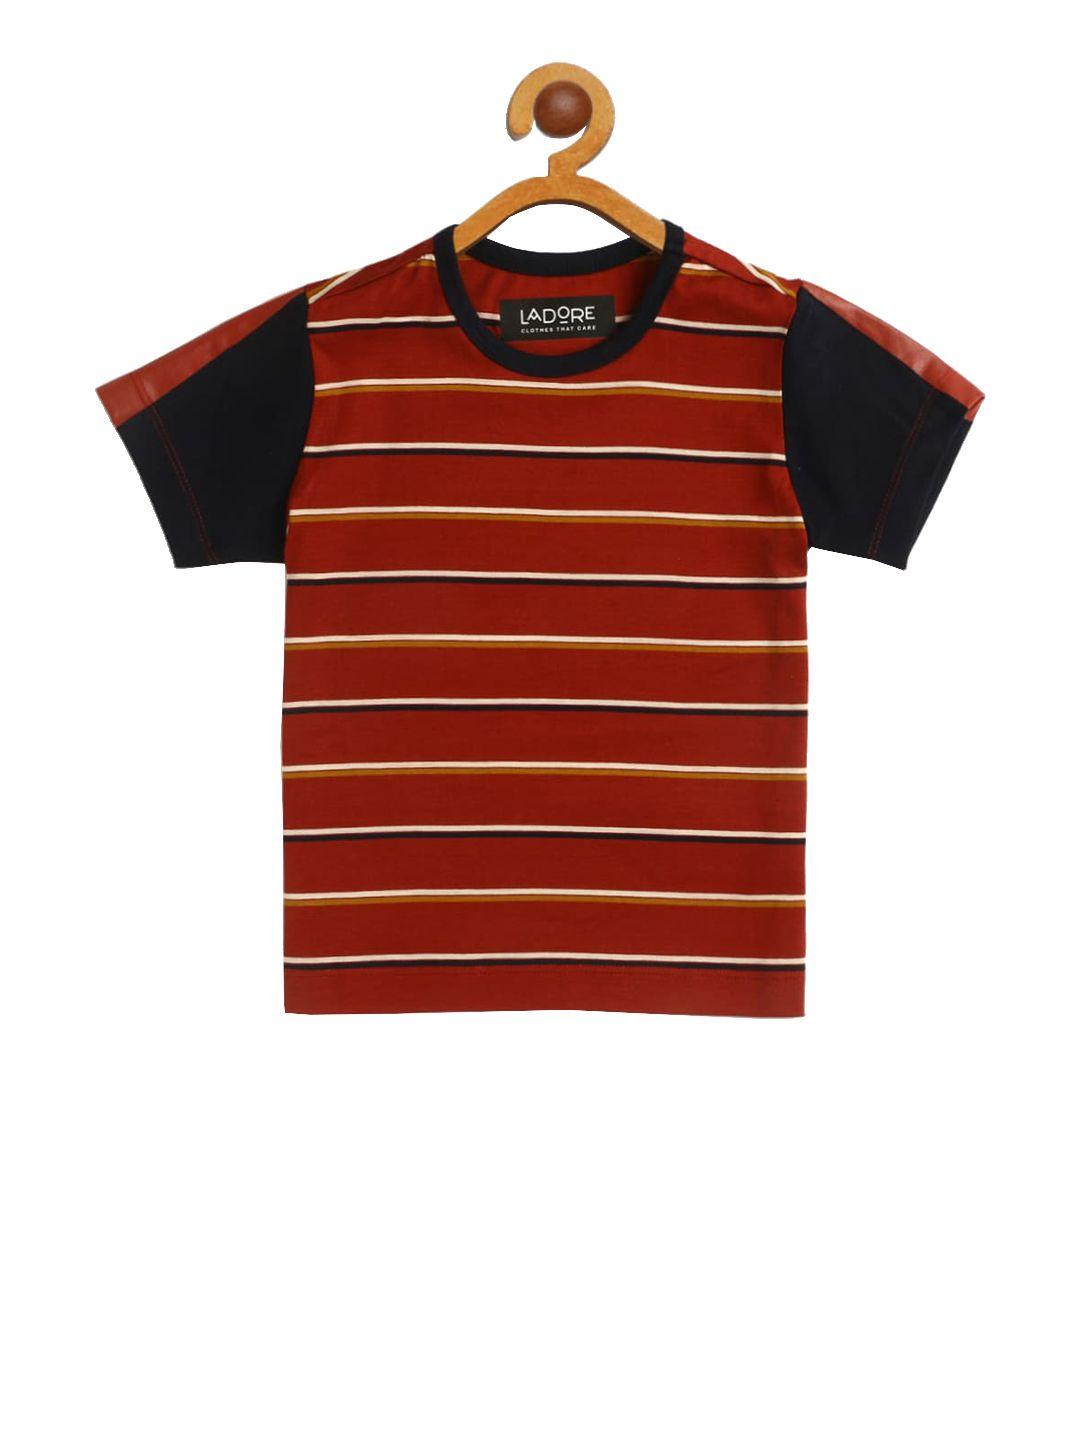 ladore kids red striped mercerised cotton round neck t-shirt